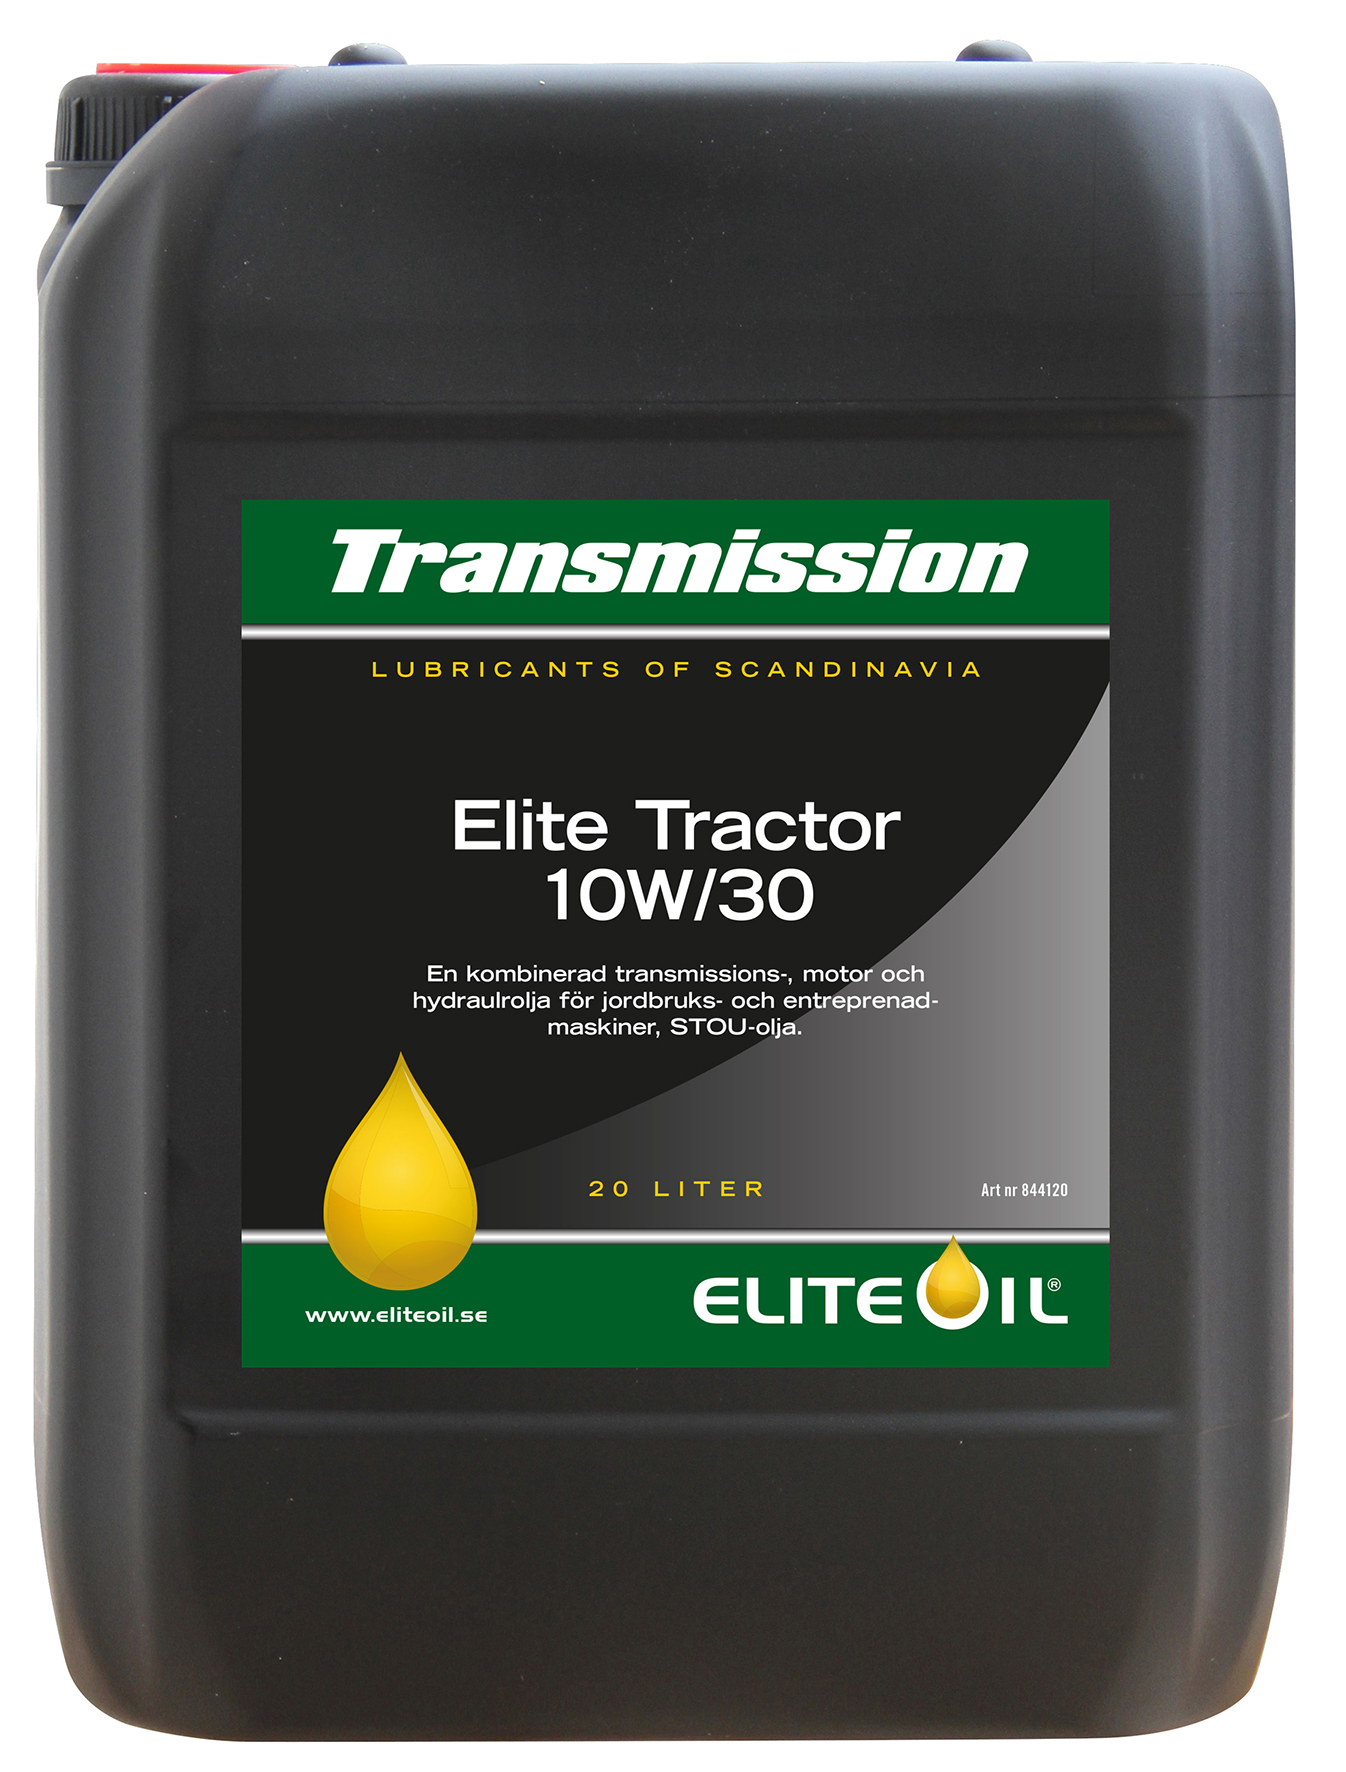 Elite Tractor Oil, 10W/30, 20 liter dunk-image